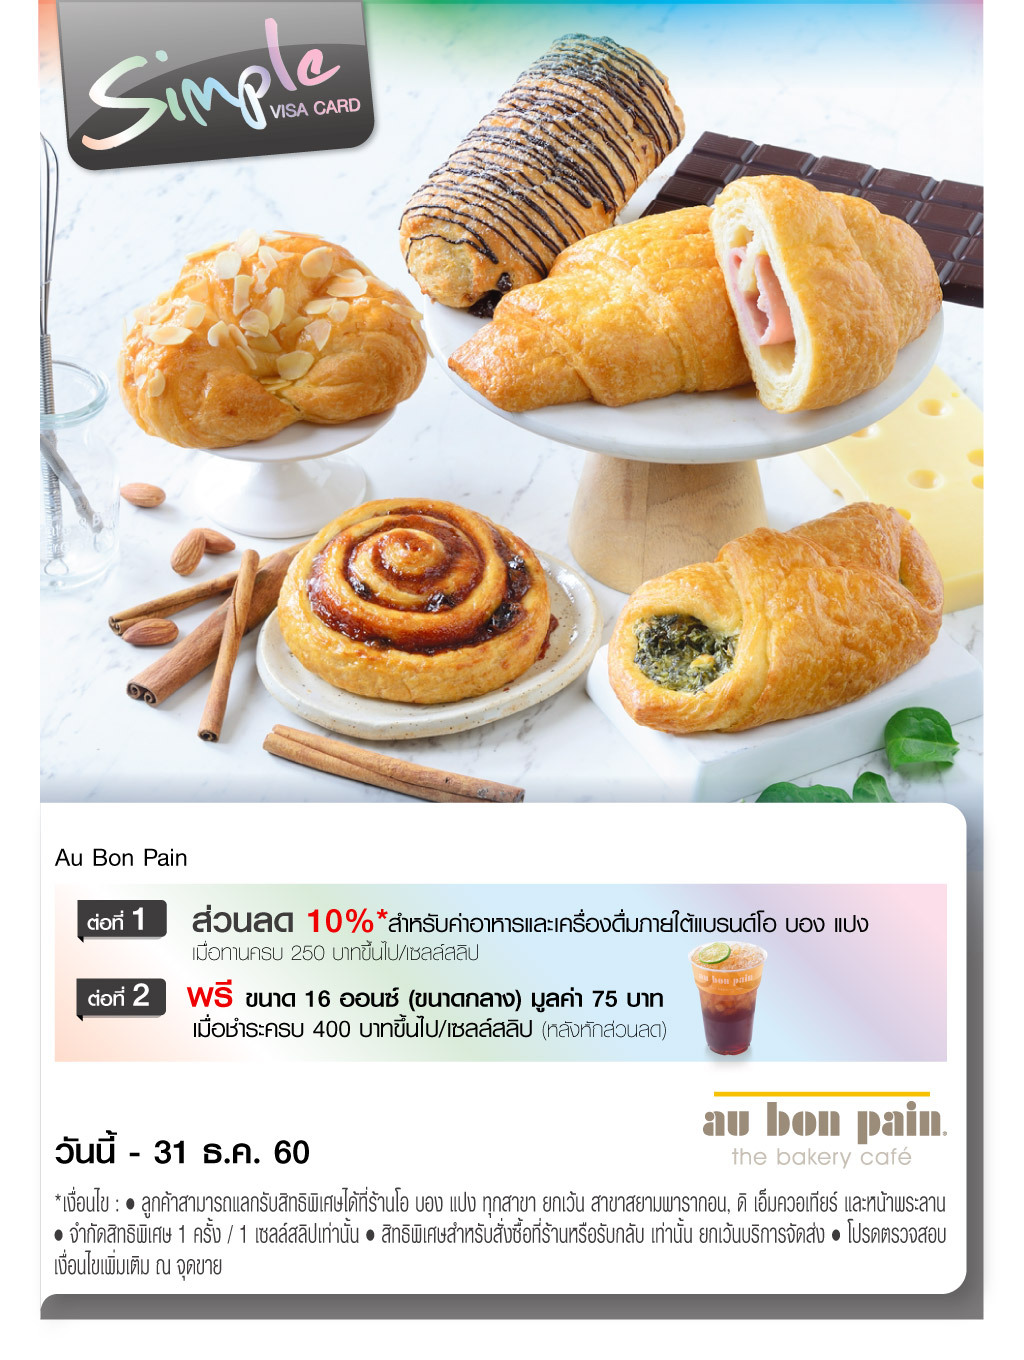 Au Bon Pain รับส่วนลด 10% - ซิมเพิล วีซ่า คาร์ด (Simple Visa Card)”